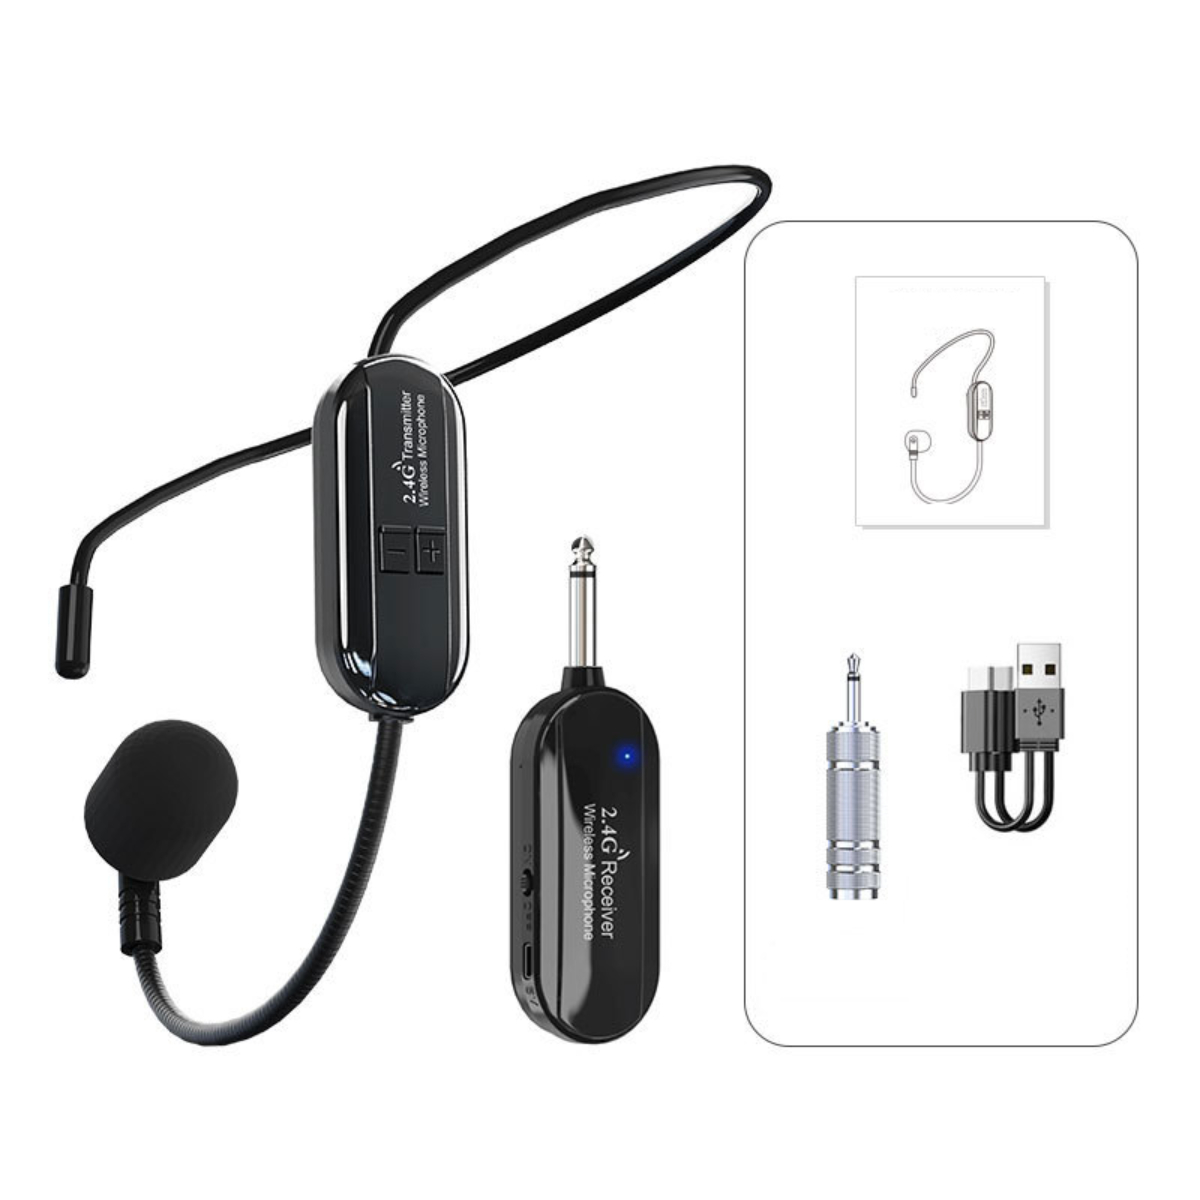 BYTELIKE Kondensator-Headset 2.4G drahtlose Headset-Mikrofon ein Mikrofon zwei Headset schwarz tow